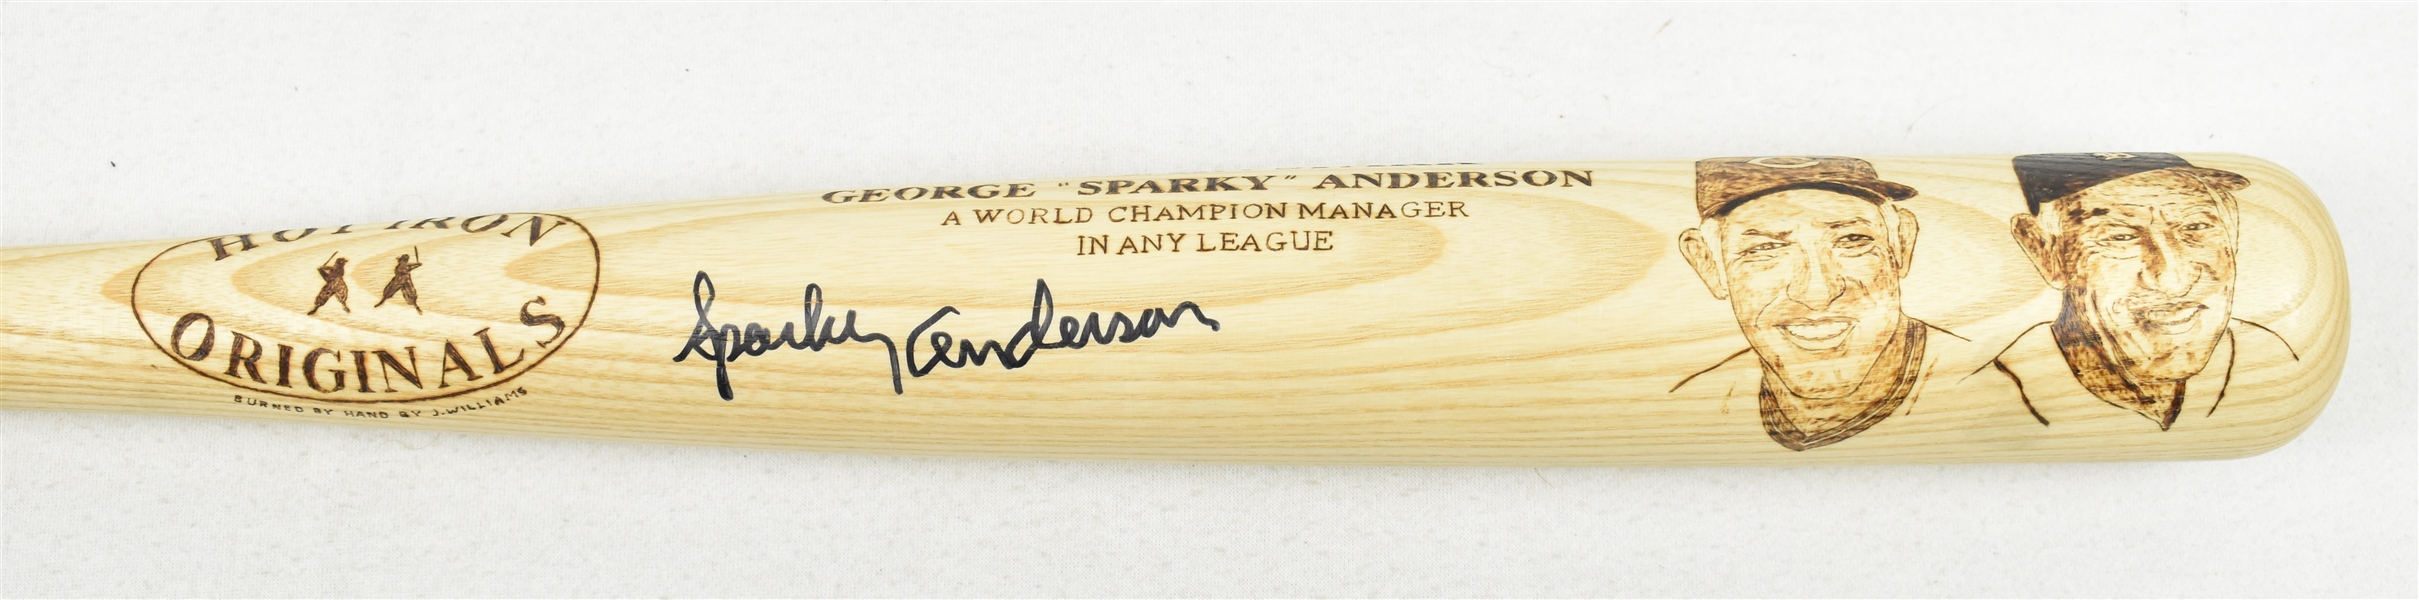 Sparky Anderson Autographed Bat